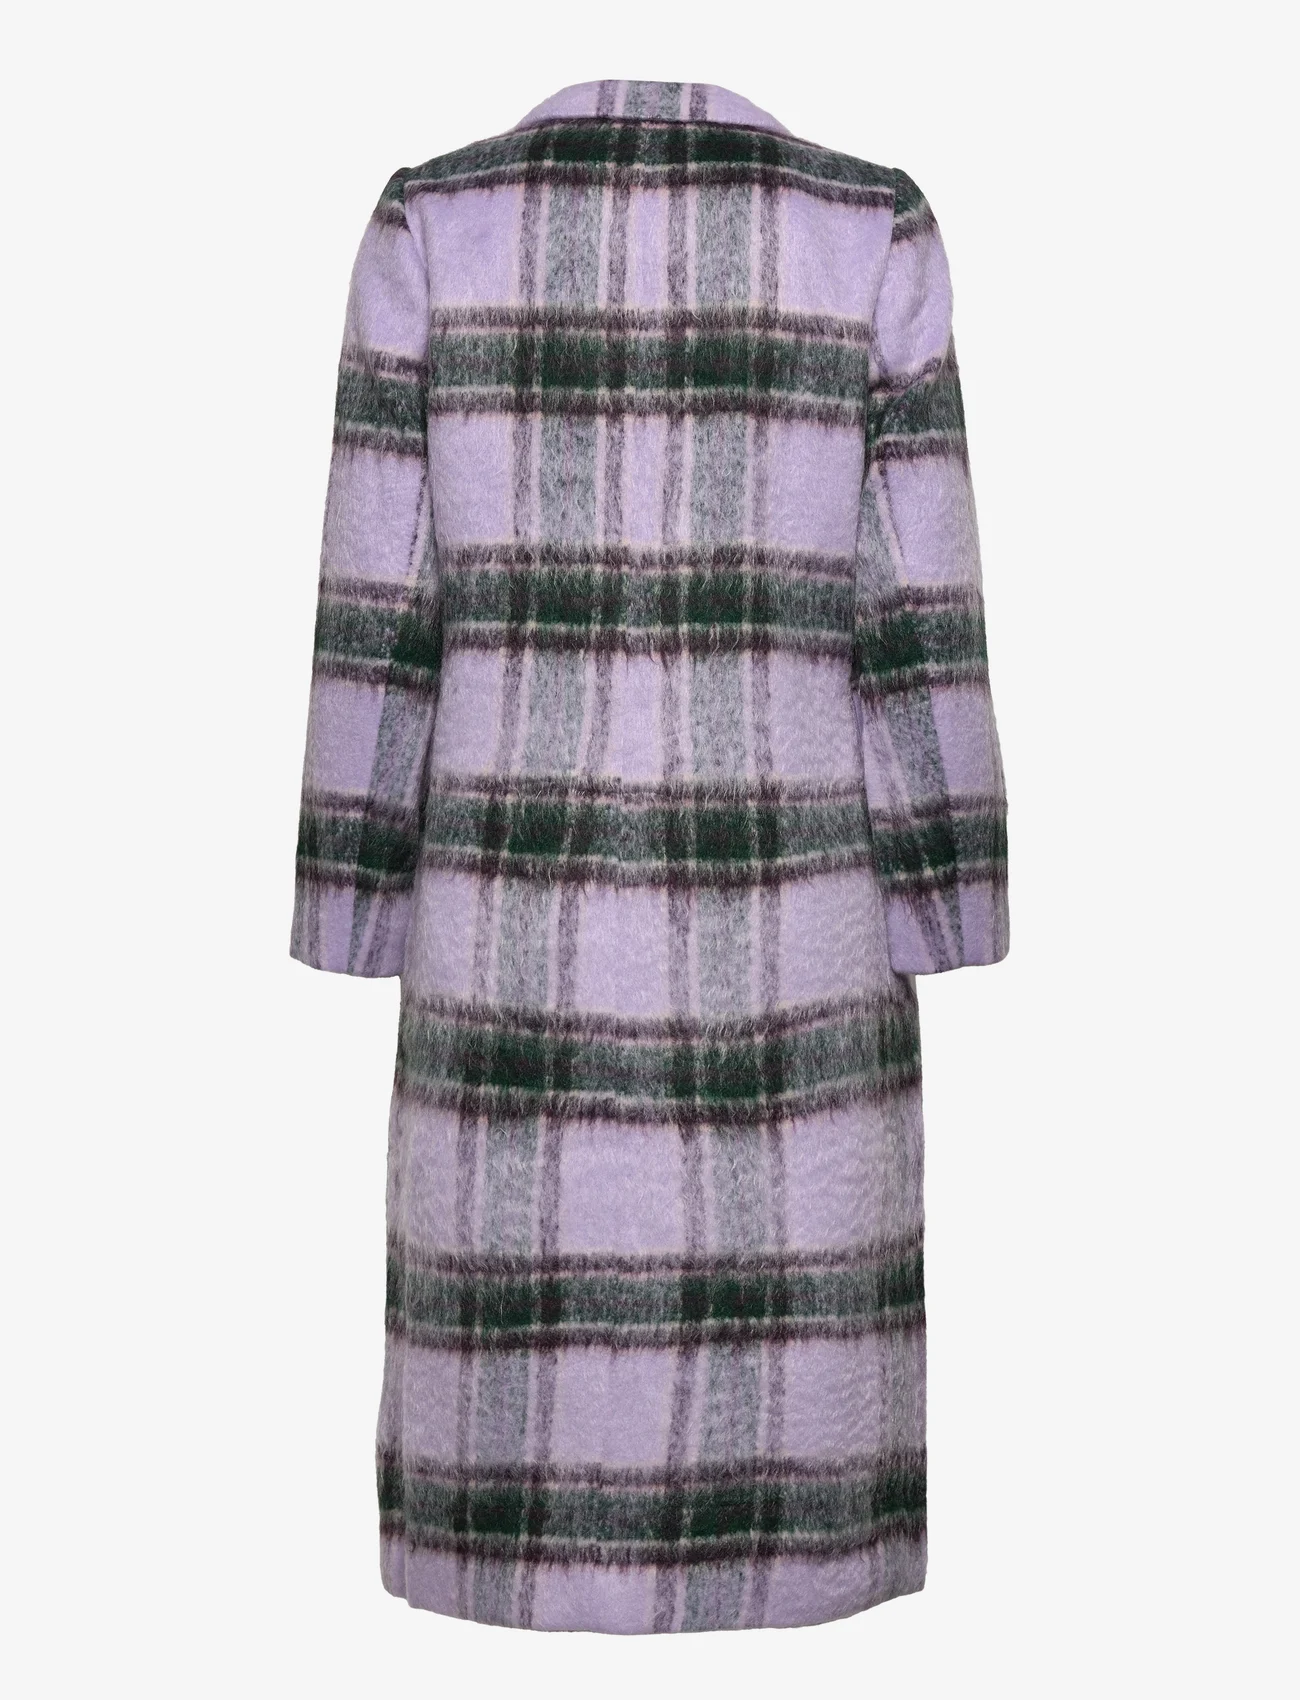 Bruuns Bazaar - Gallica Alanna coat - winterjassen - purple check - 1